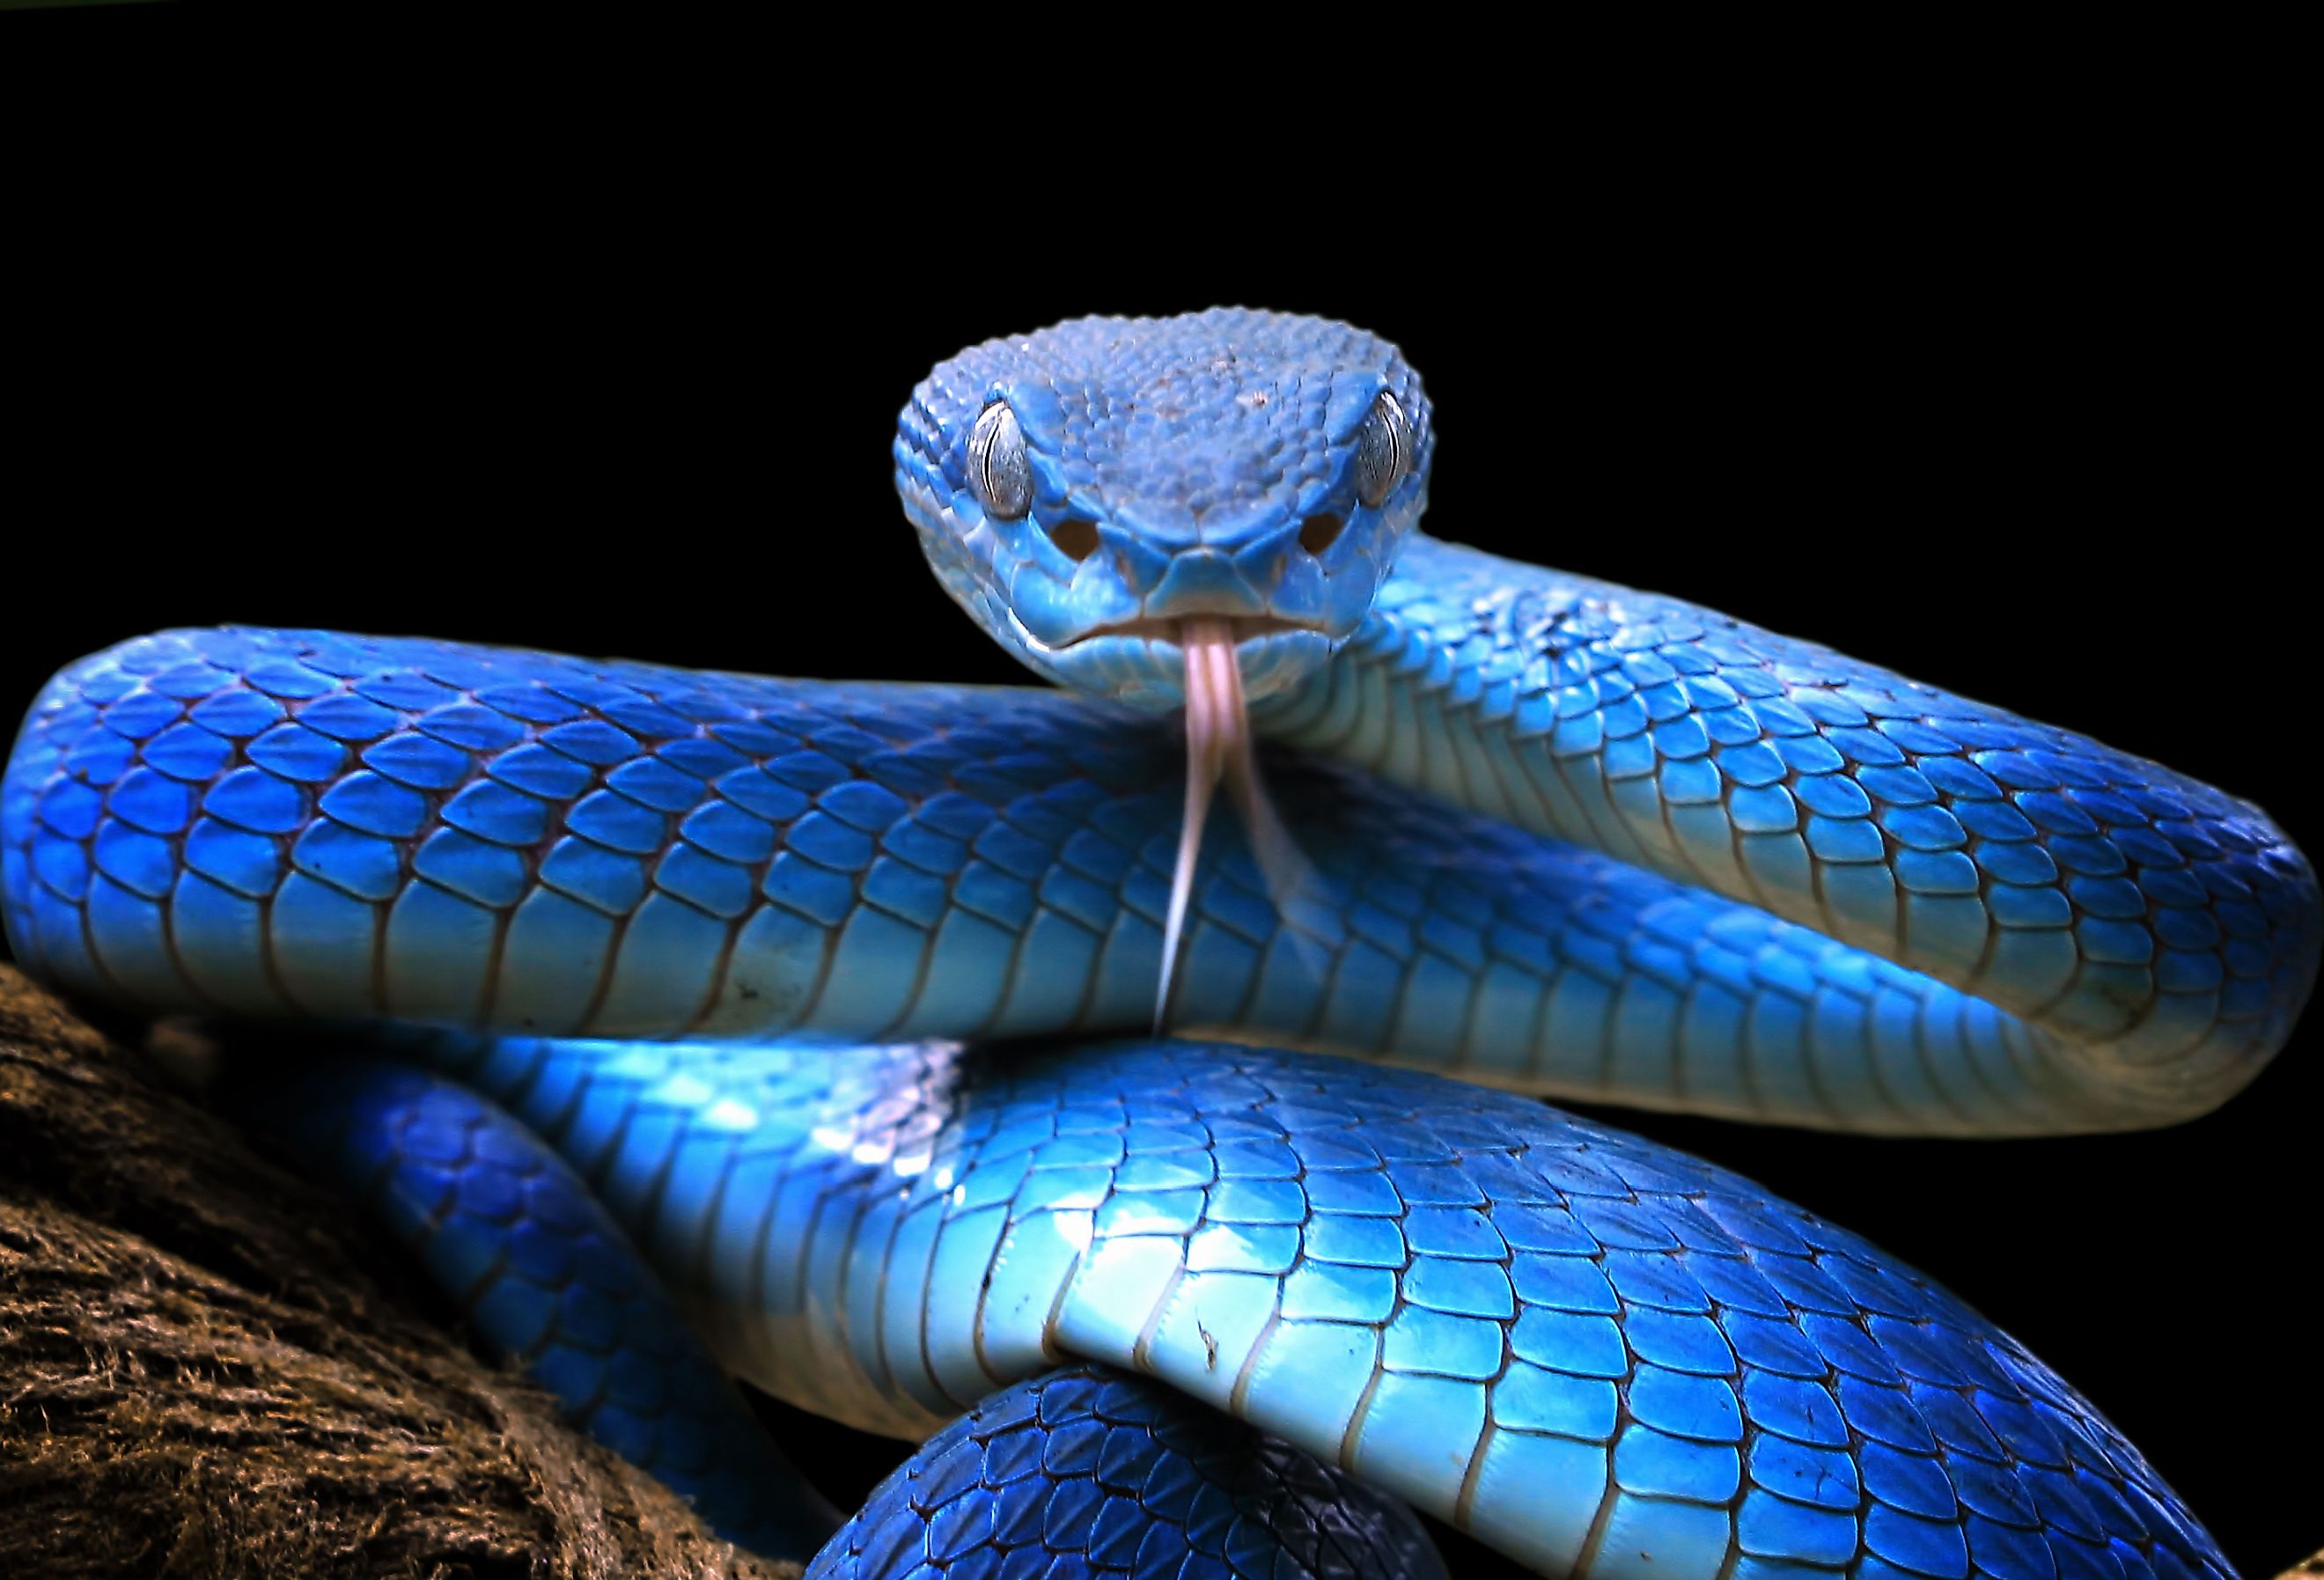 Snakes - WorldAtlas